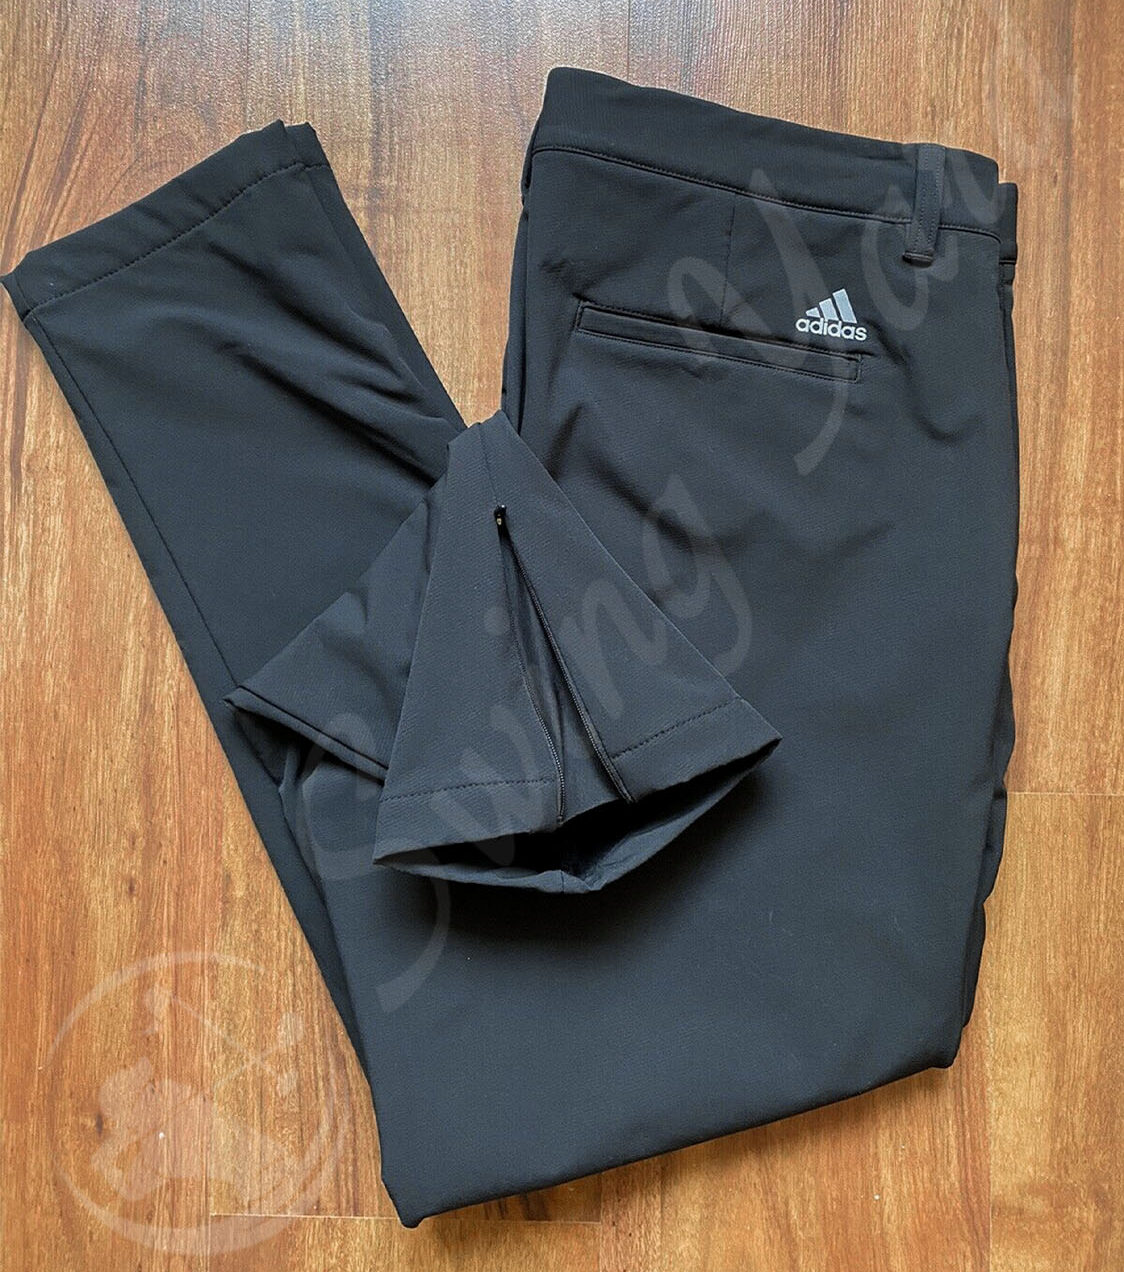 Showing my Adidas frostguard insulated winter golf pants zipper at the bottom hem